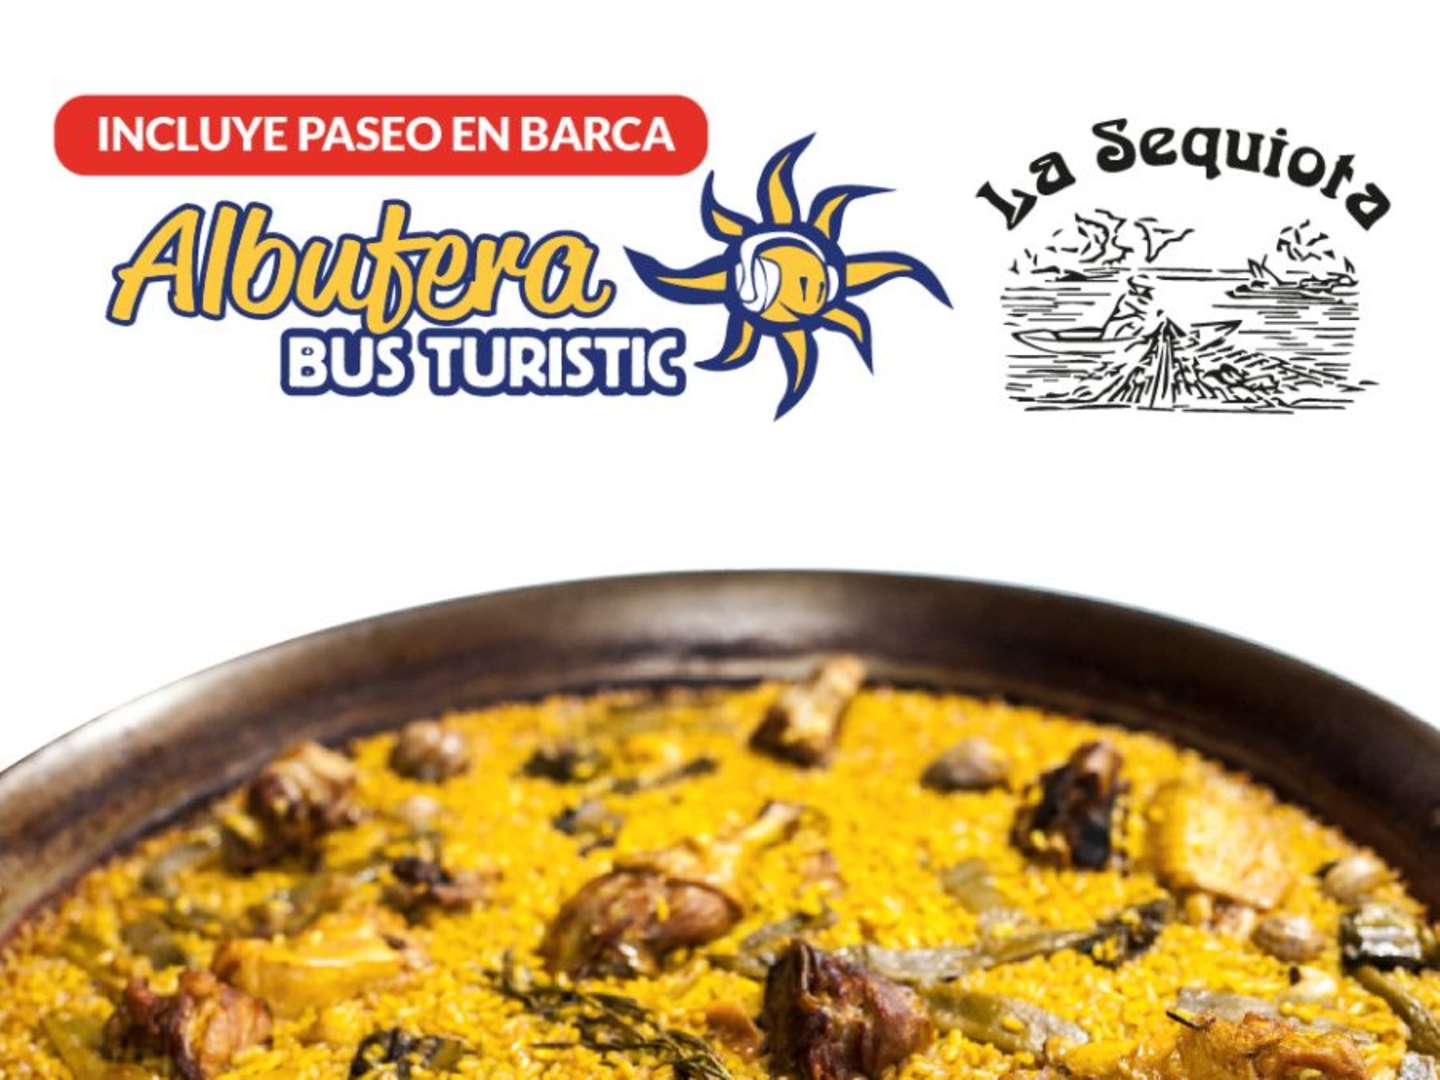 ALBUFERA BUS TURISTIC + MENÚ - Billete Albufera + menú - desde 30.00 €  